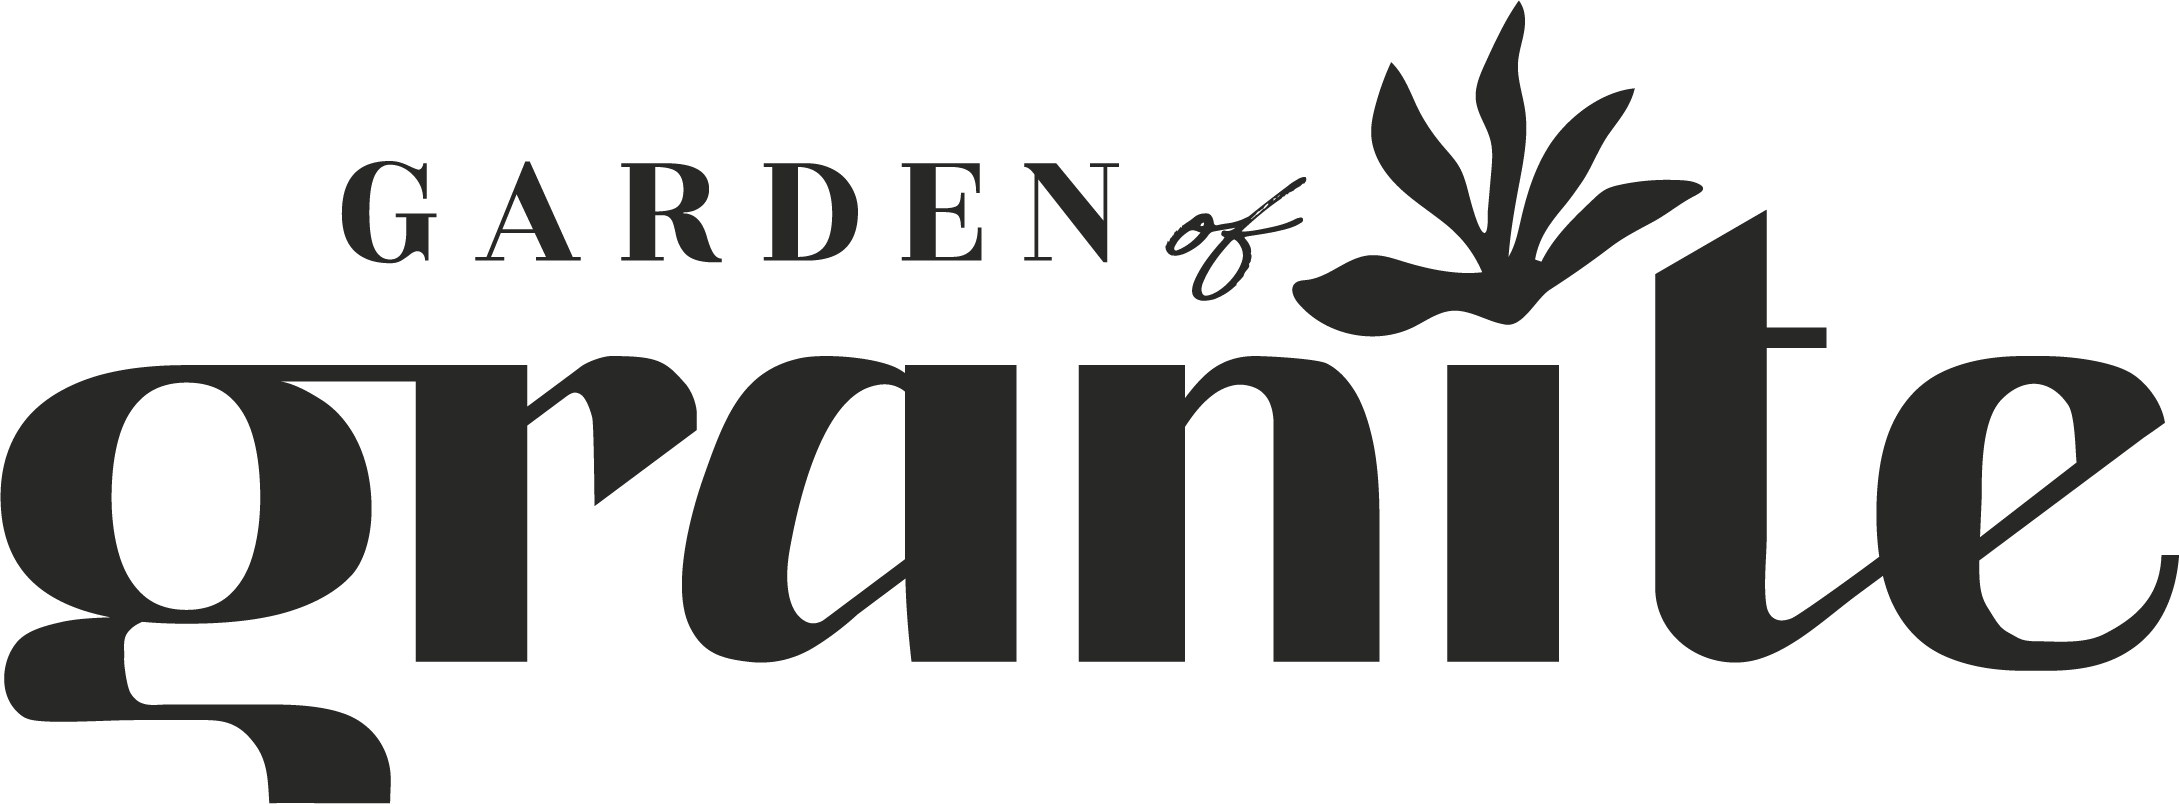 Garden of Granite Winery